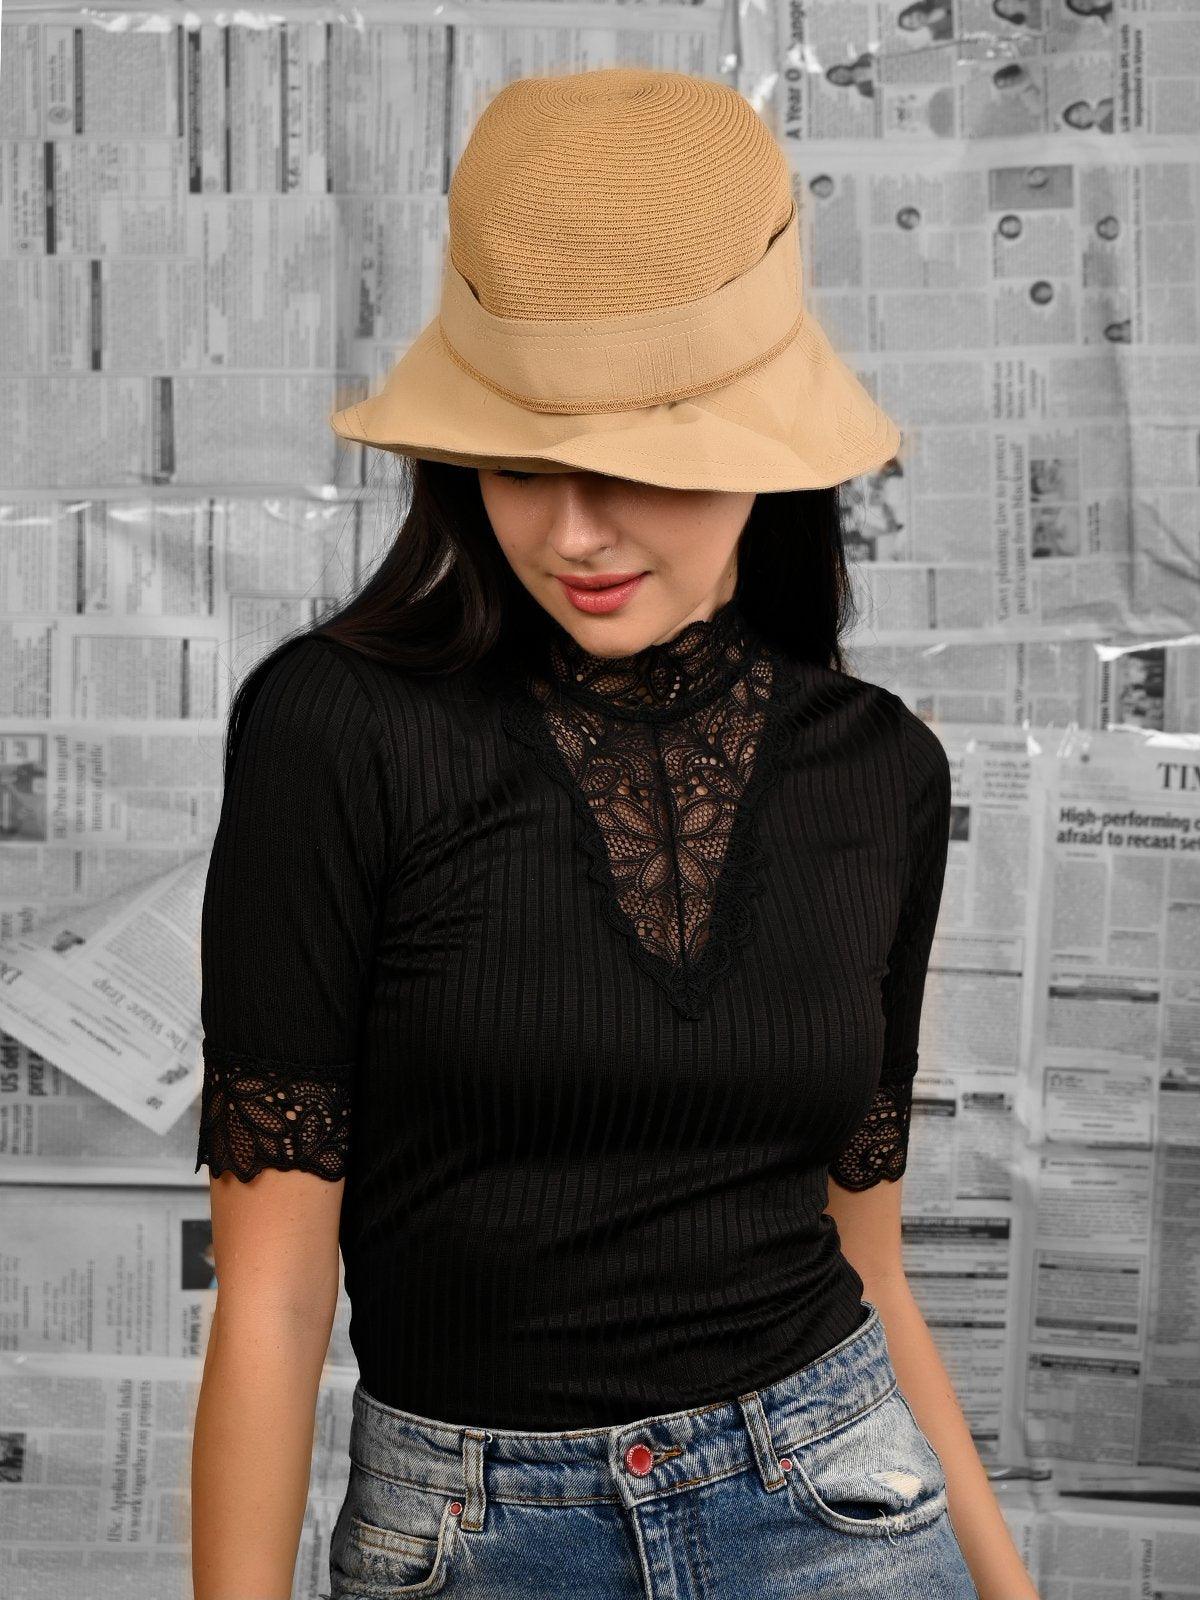 Crochet Designer Hat - Odette